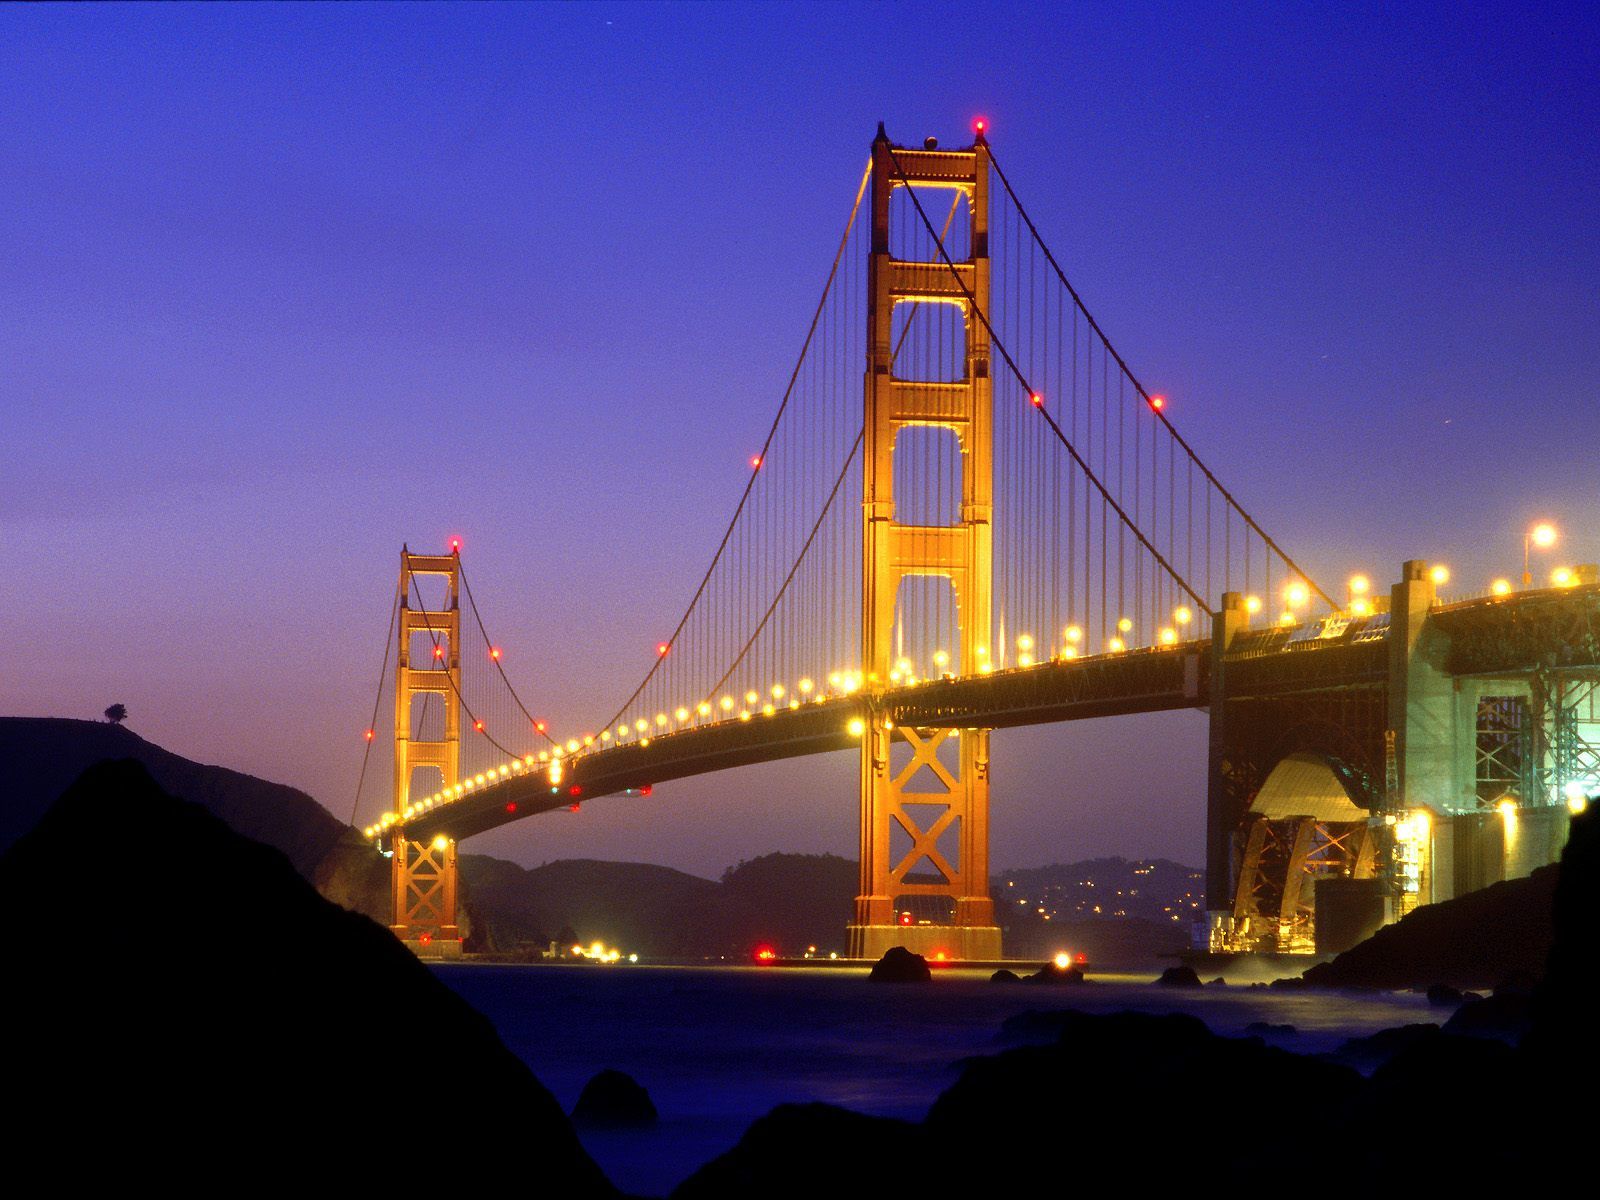 https://blogger.googleusercontent.com/img/b/R29vZ2xl/AVvXsEj30VSlqd6mcmnz383TzncIpD6zS0pDCGb1FxAscdvSvoJ3gCMgNcQKdb7mIprBxPRBh3E9ADi70PQOIAXHGDF8wO4MehCgoUaodqgcp5poG8qrBiZ-OuDEkfSkFzehnSyHciCTwG4Wzwg/s1600/Golden_Gate_Bridge_From_Baker_Beach_San_Francisco_California.jpg